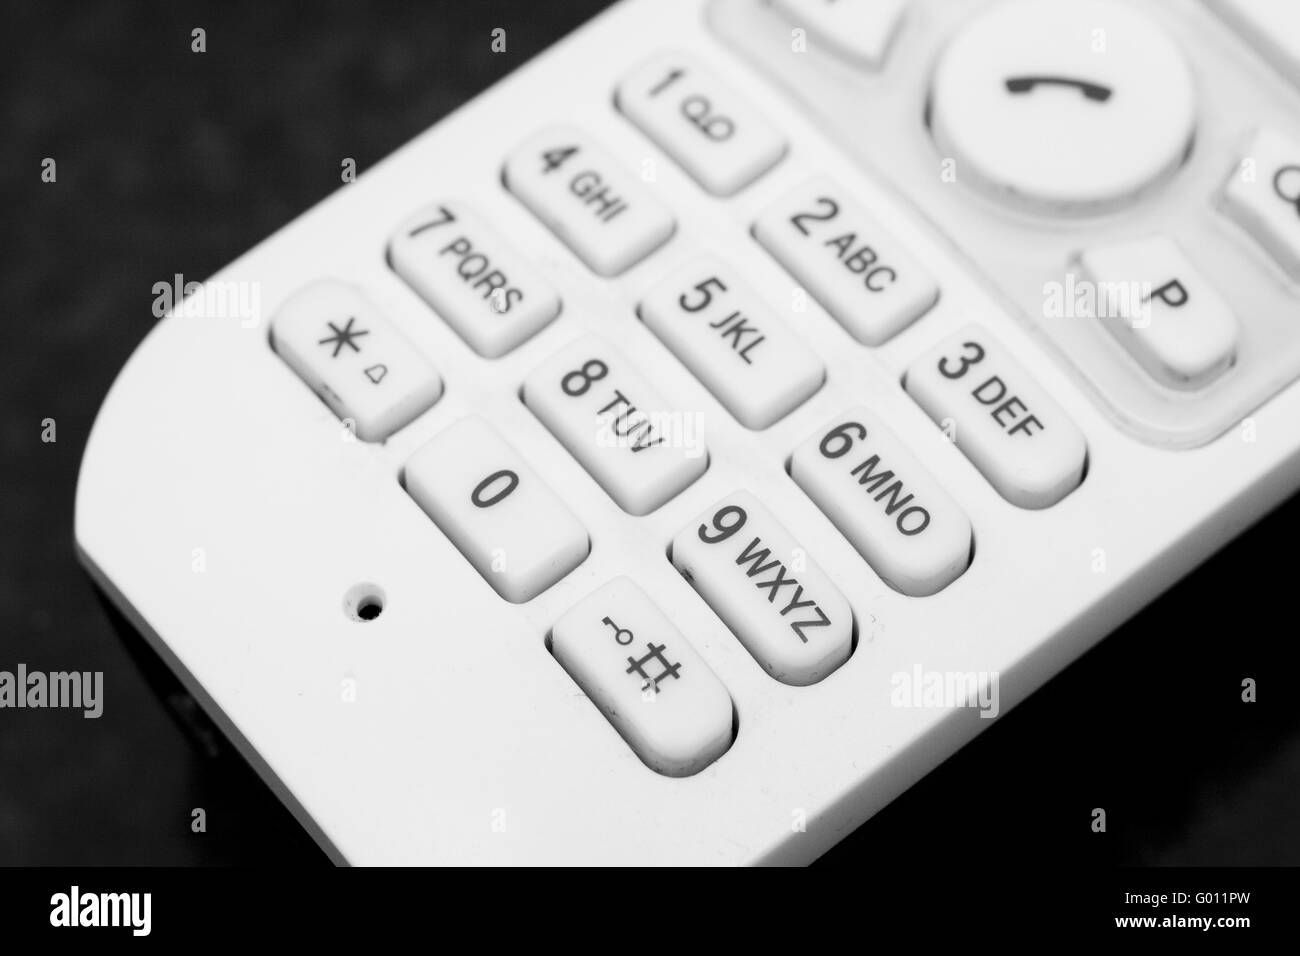 Telefon Tastatur Black and White Stock Photos & Images - Alamy